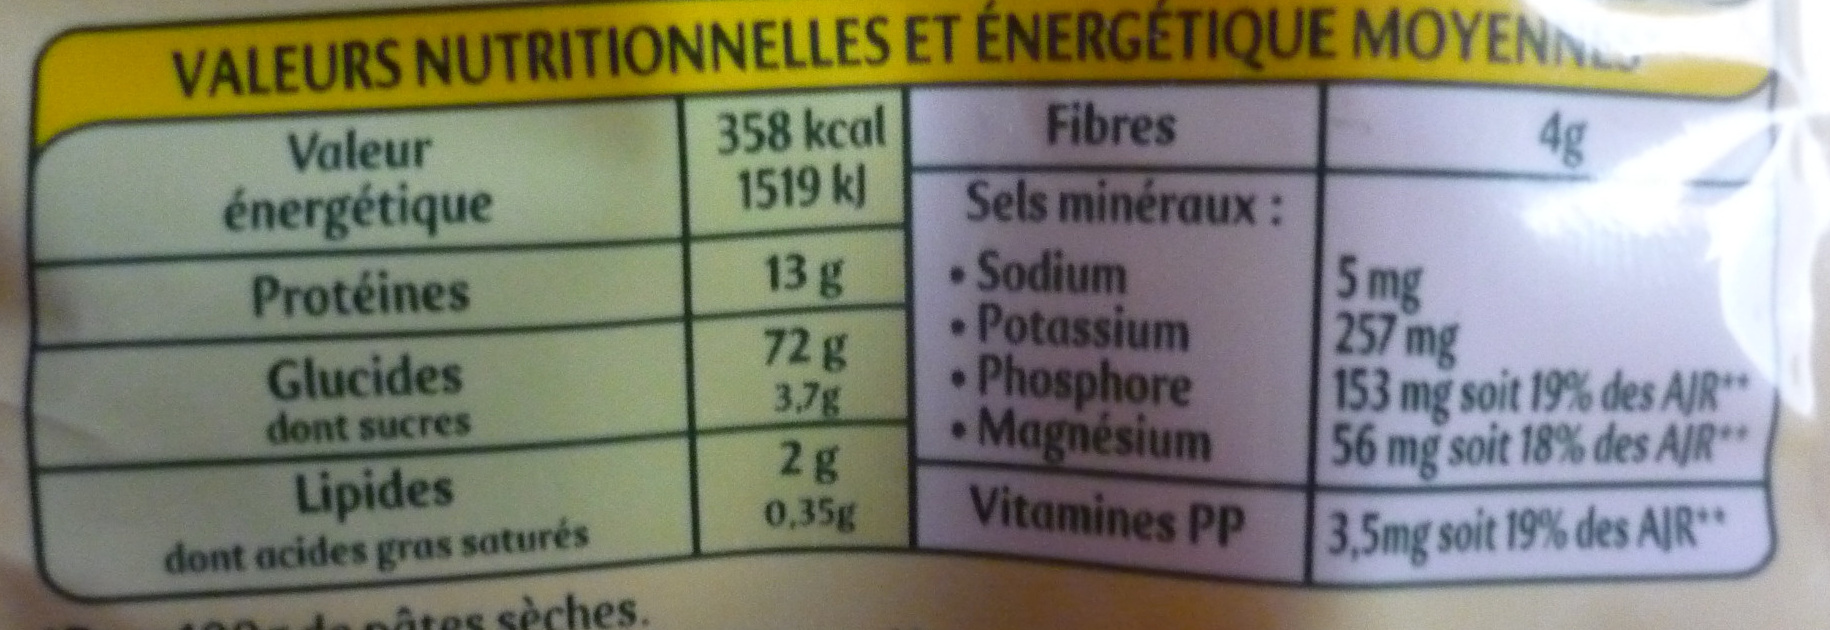 Panzani gansettes 500g - Tableau nutritionnel